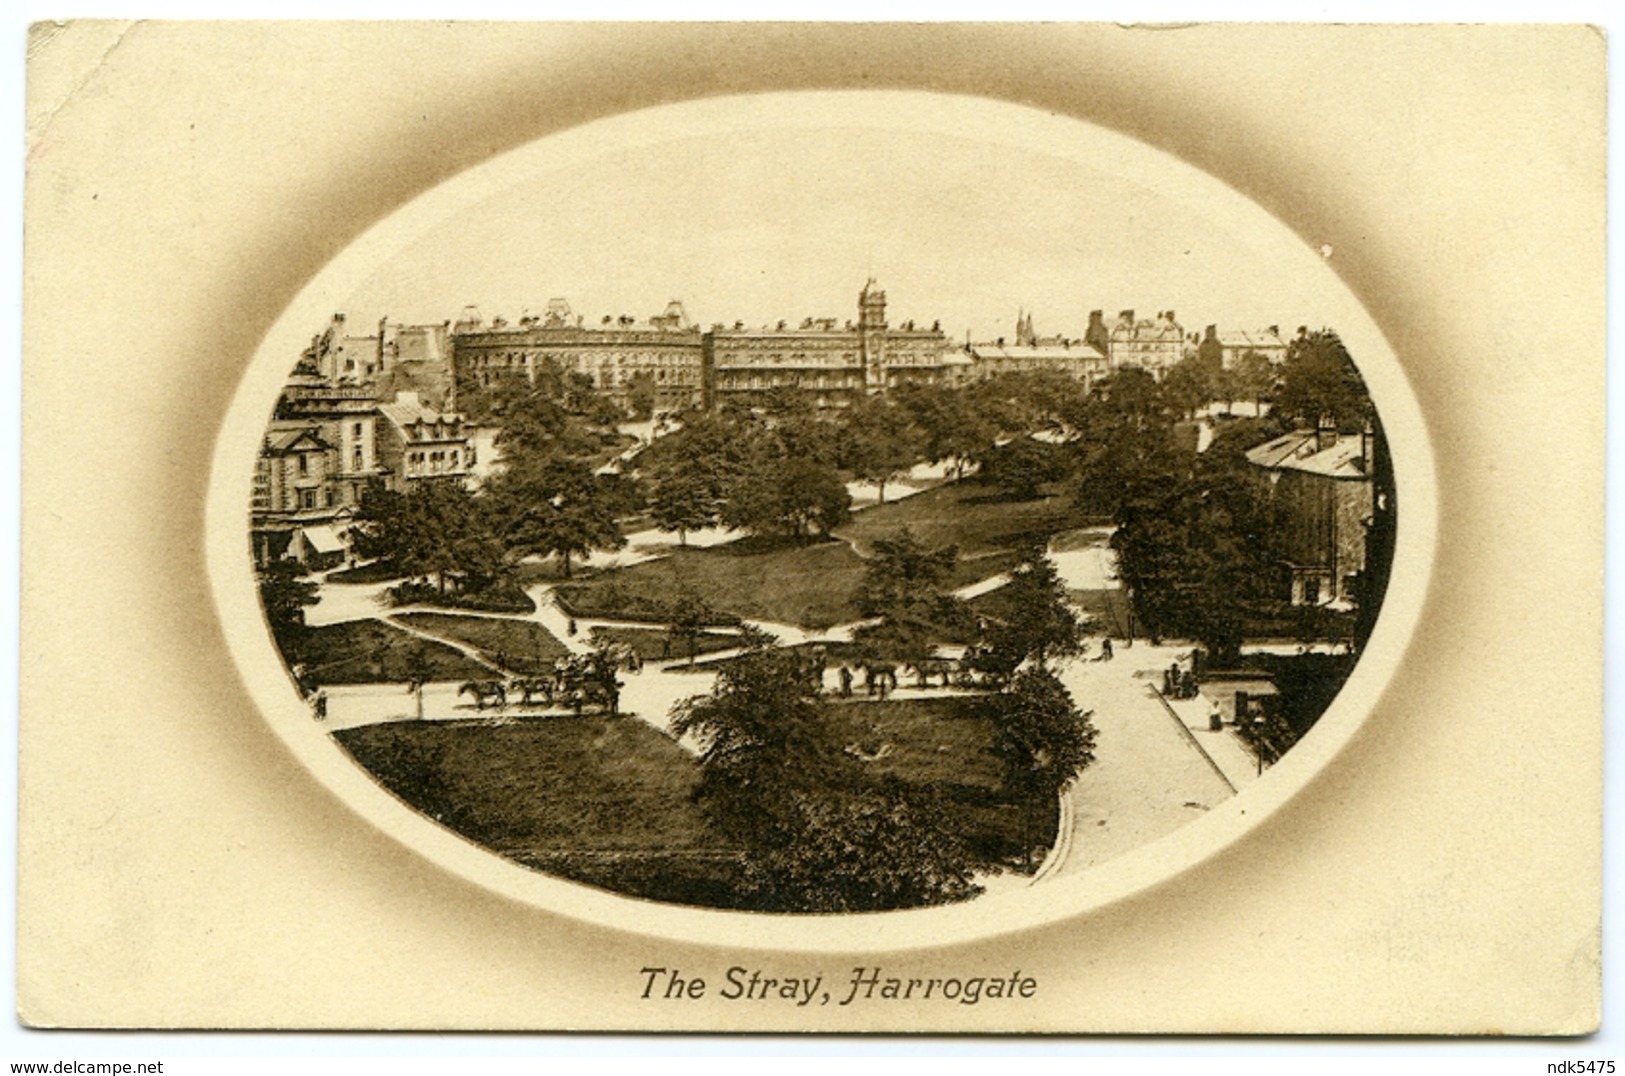 HARROGATE : THE STRAY / POSTMARK - HARROGATE (SINGLE CIRCLE) / ADDRESS - HOUNSLOW, LAMPTON ROAD (ALDRIDGE) - Harrogate